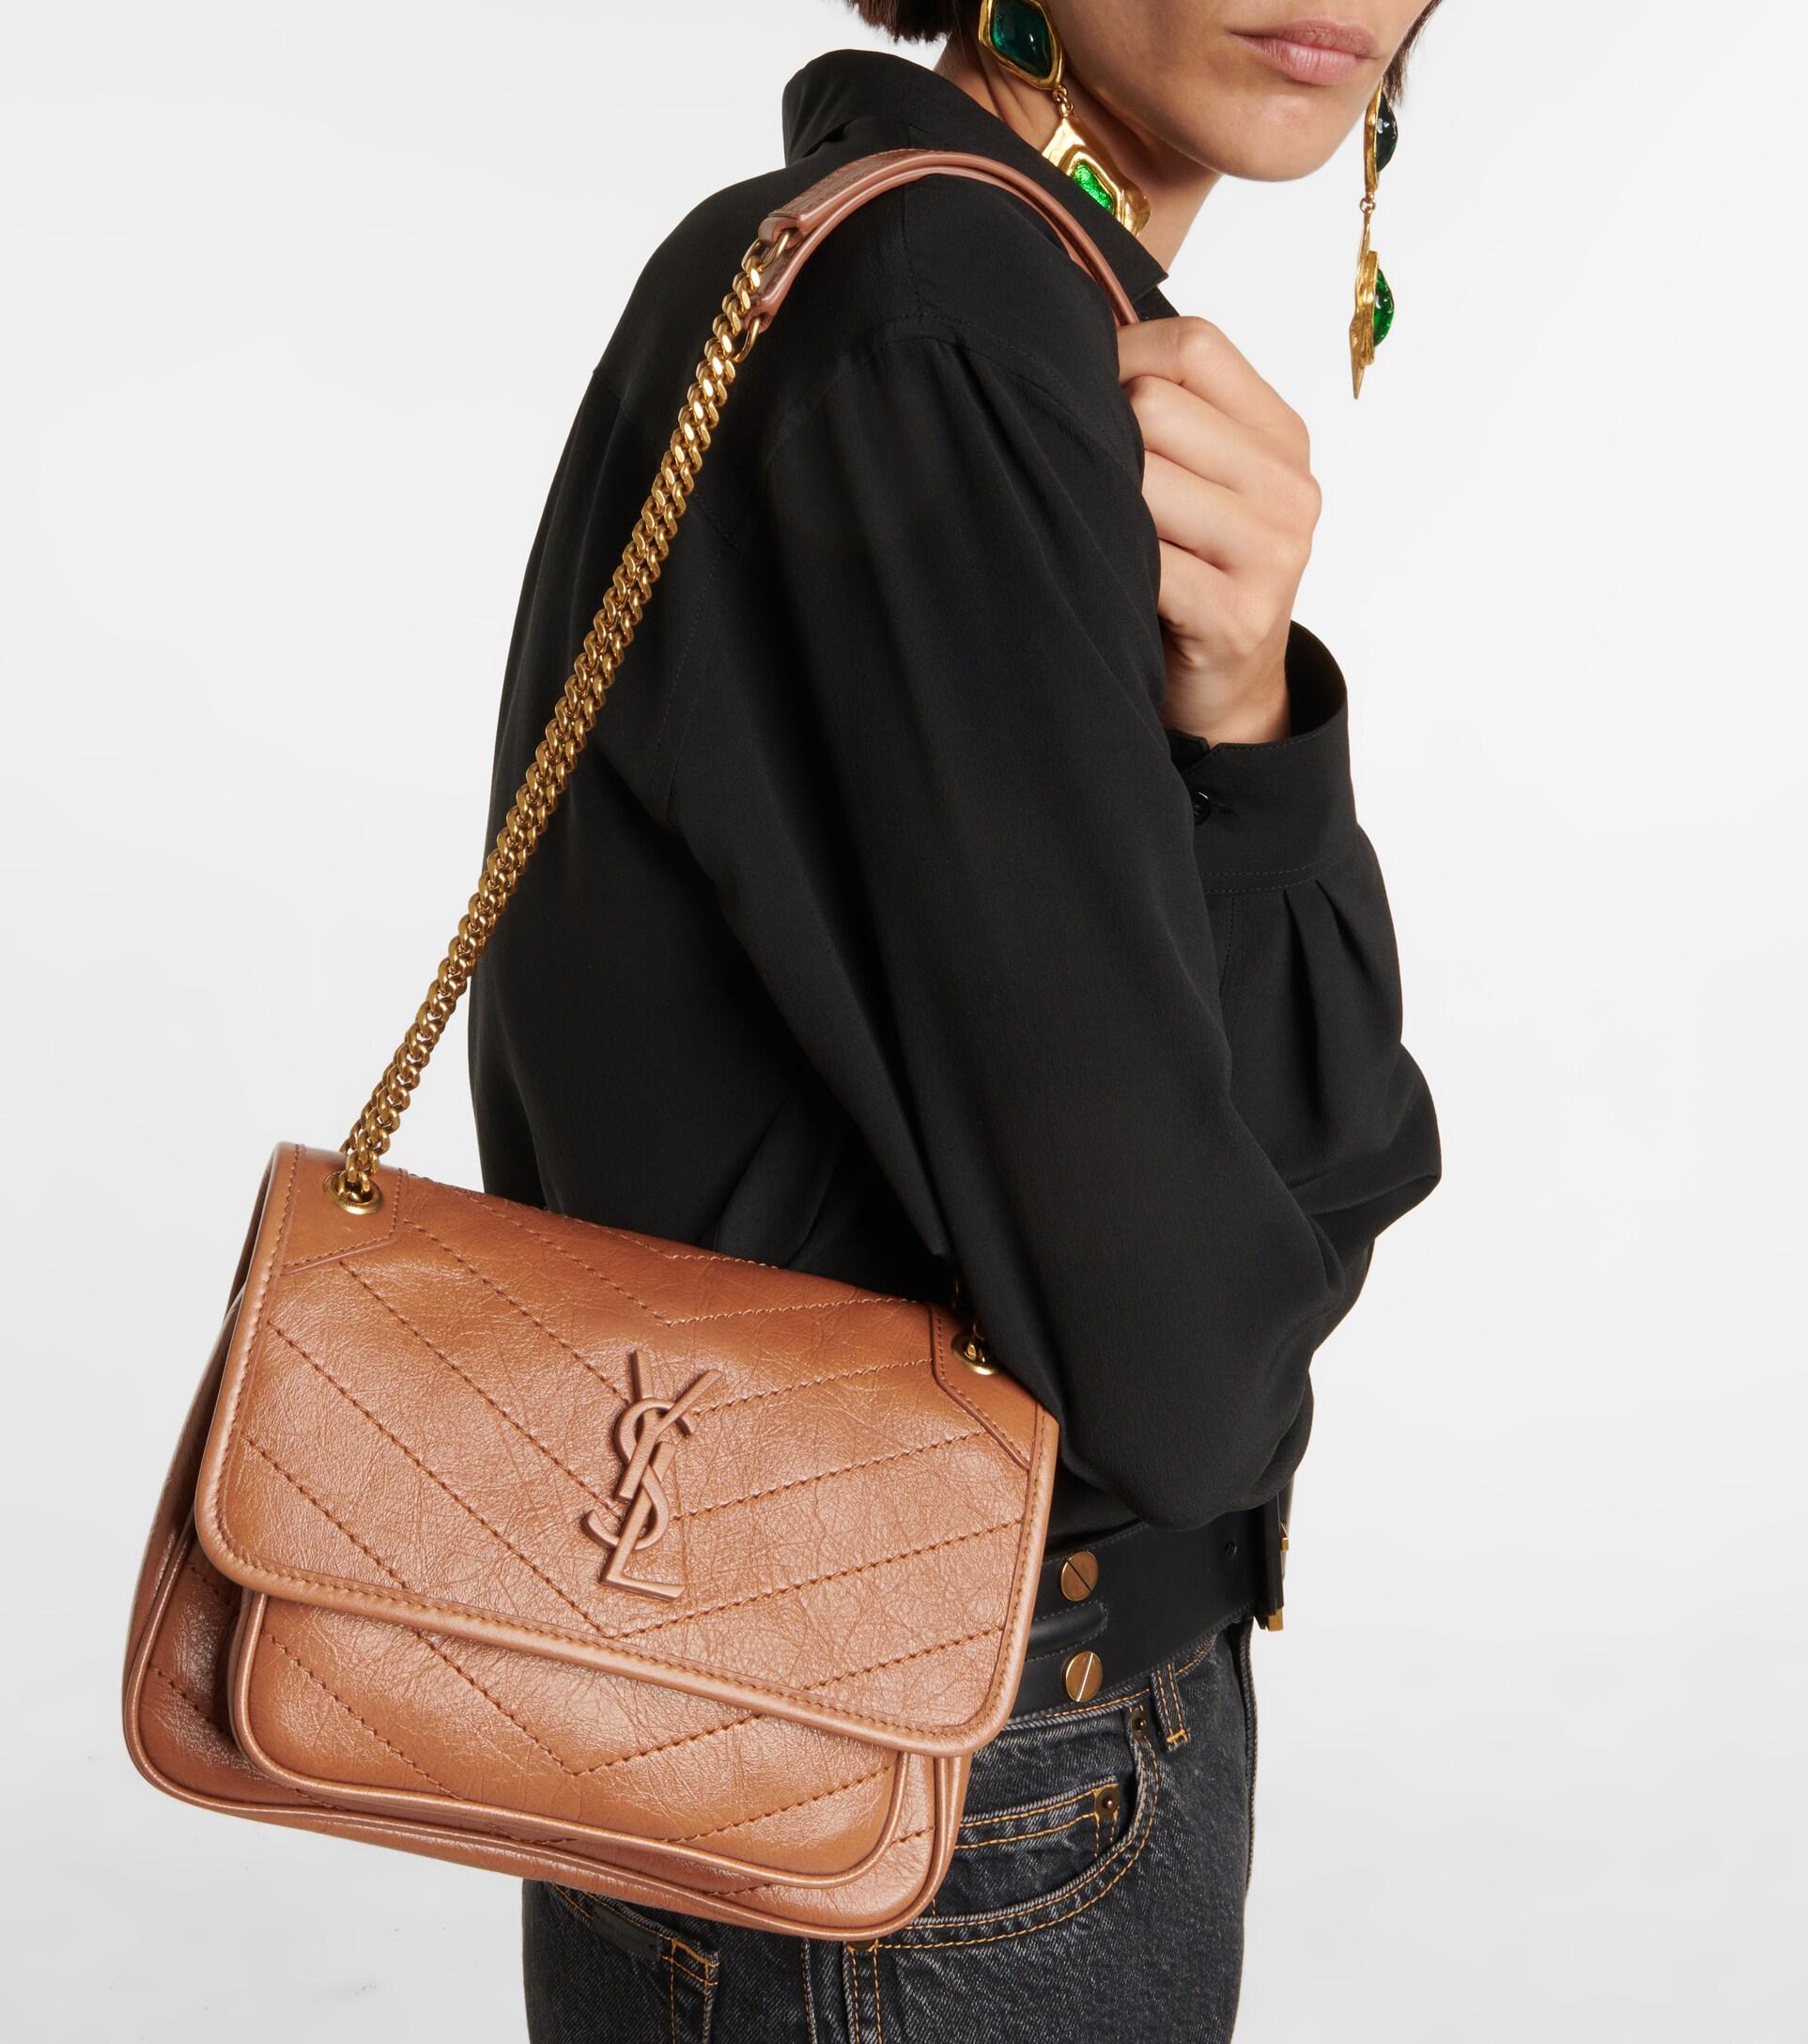 Yves Saint Laurent Mini Caby Calfskin Leather Shoulder Bag